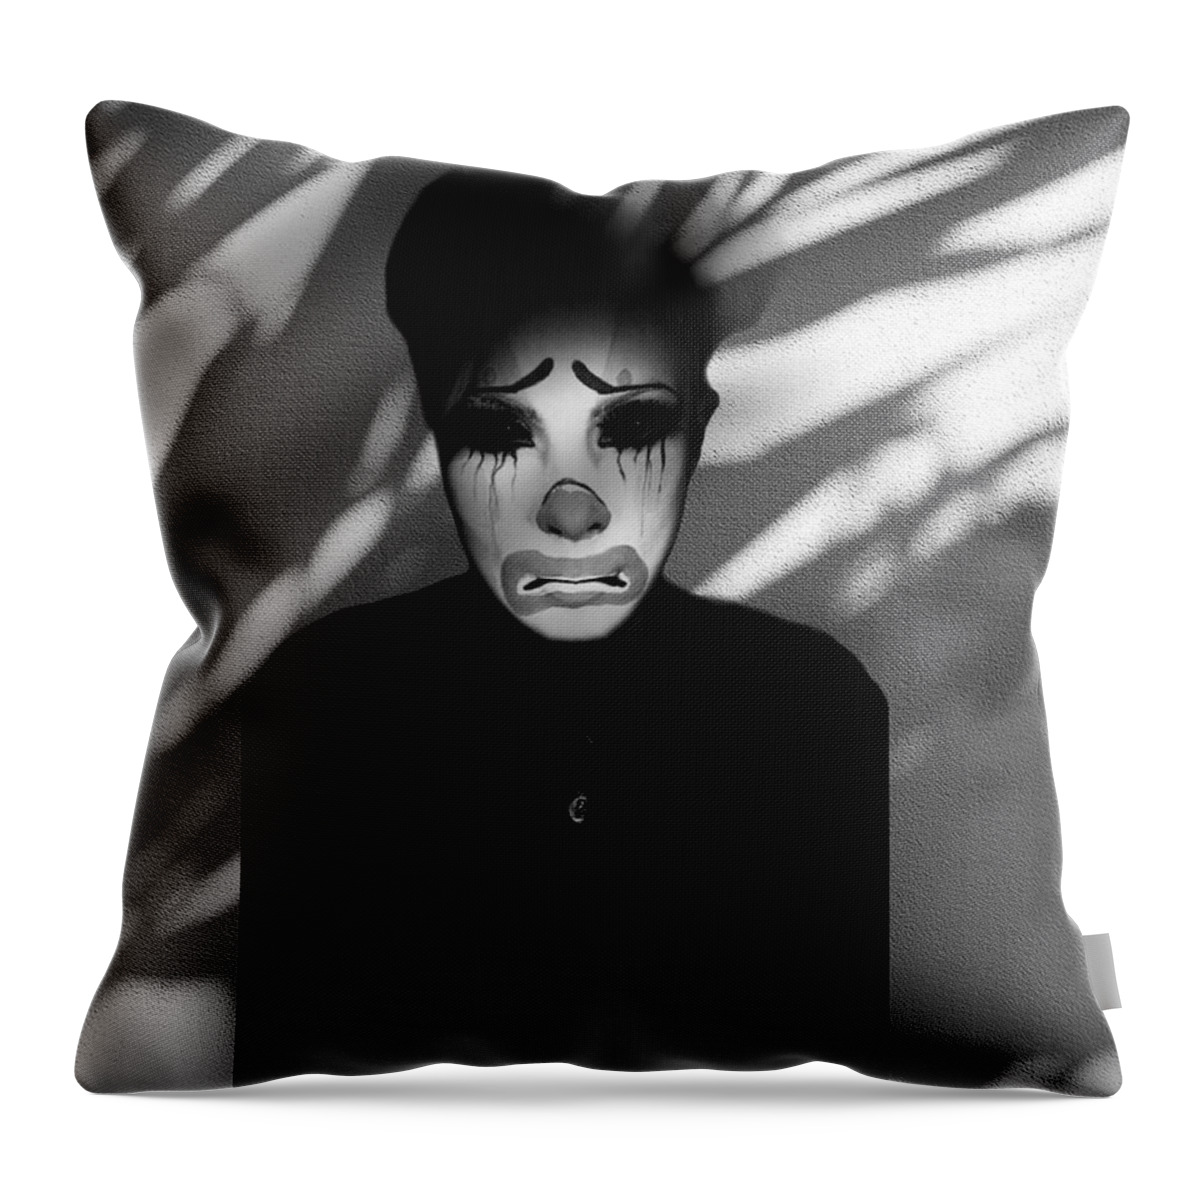 Clown Throw Pillow featuring the digital art Happy Clown by Tanja Leuenberger